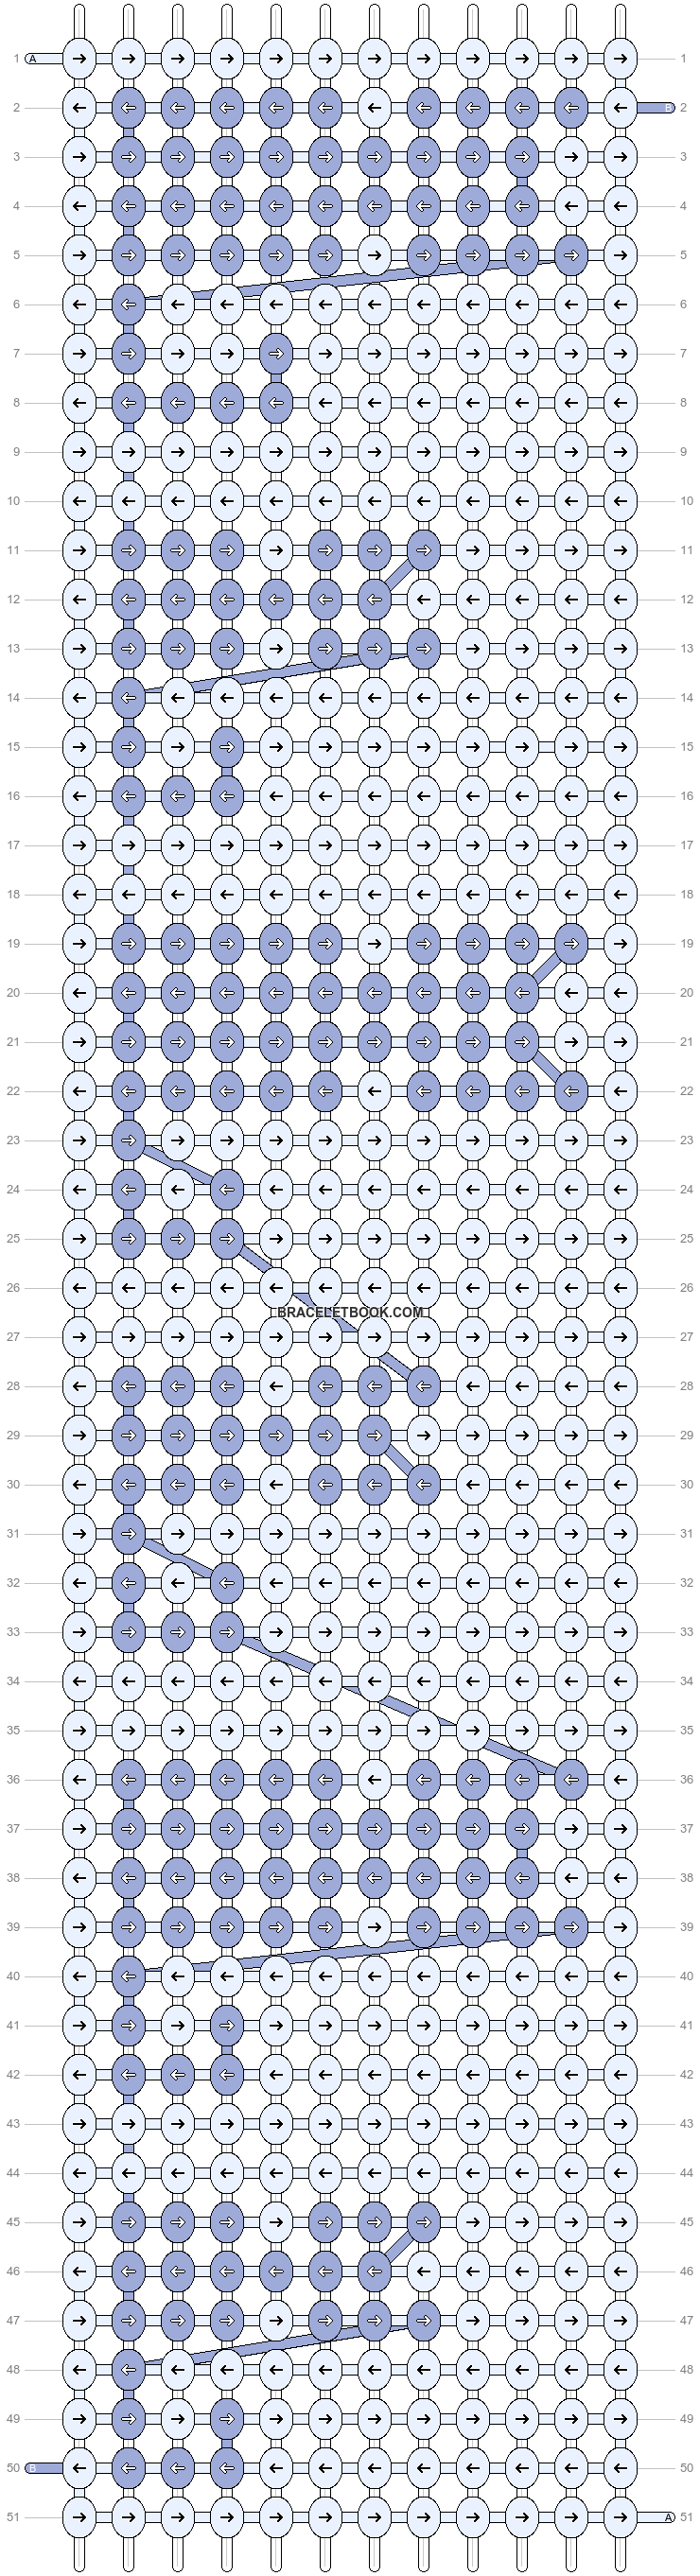 Alpha pattern #35480 variation #55654 pattern